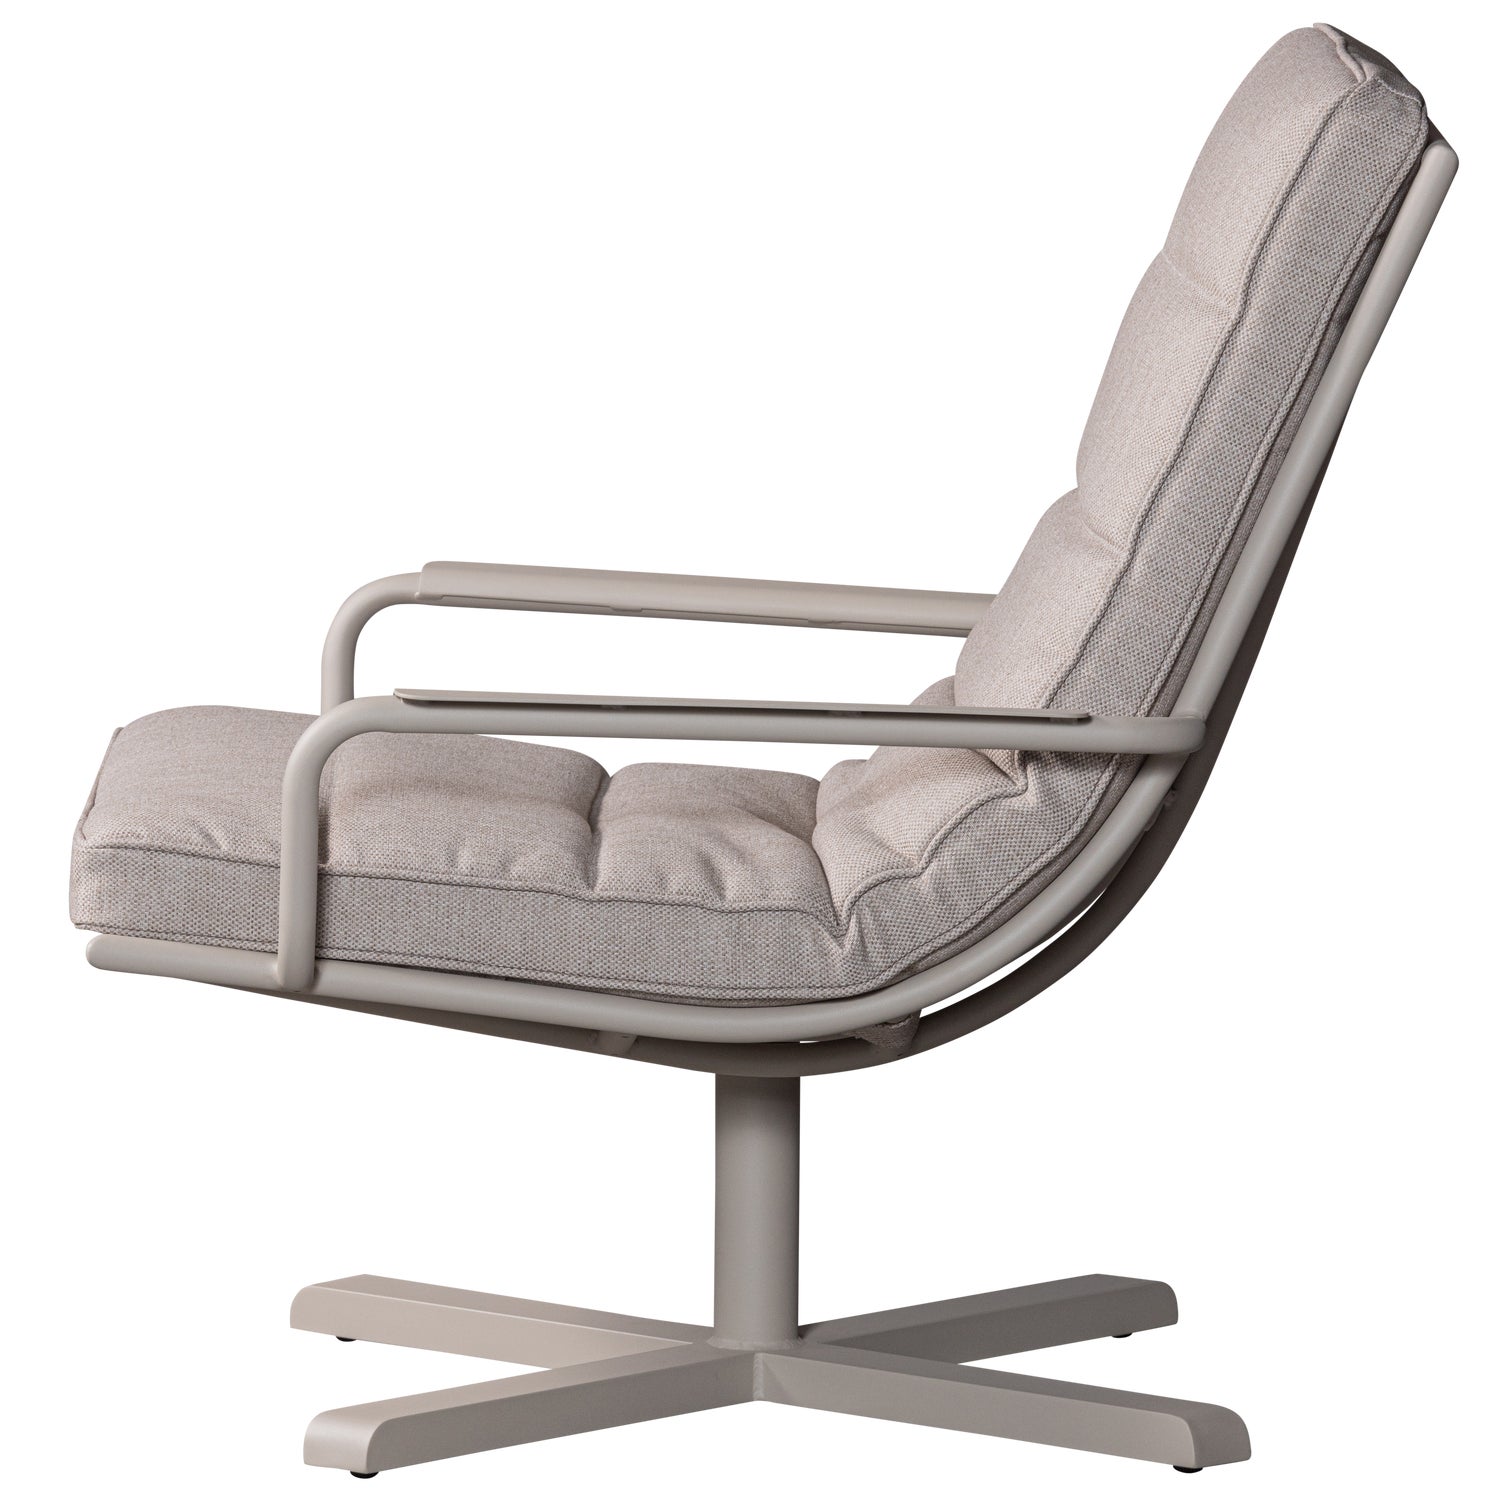 500009-Z-03_VS_EXT_Coosa_fauteuil_alluminium_zand.png?auto=webp&format=png&width=1500&height=1500